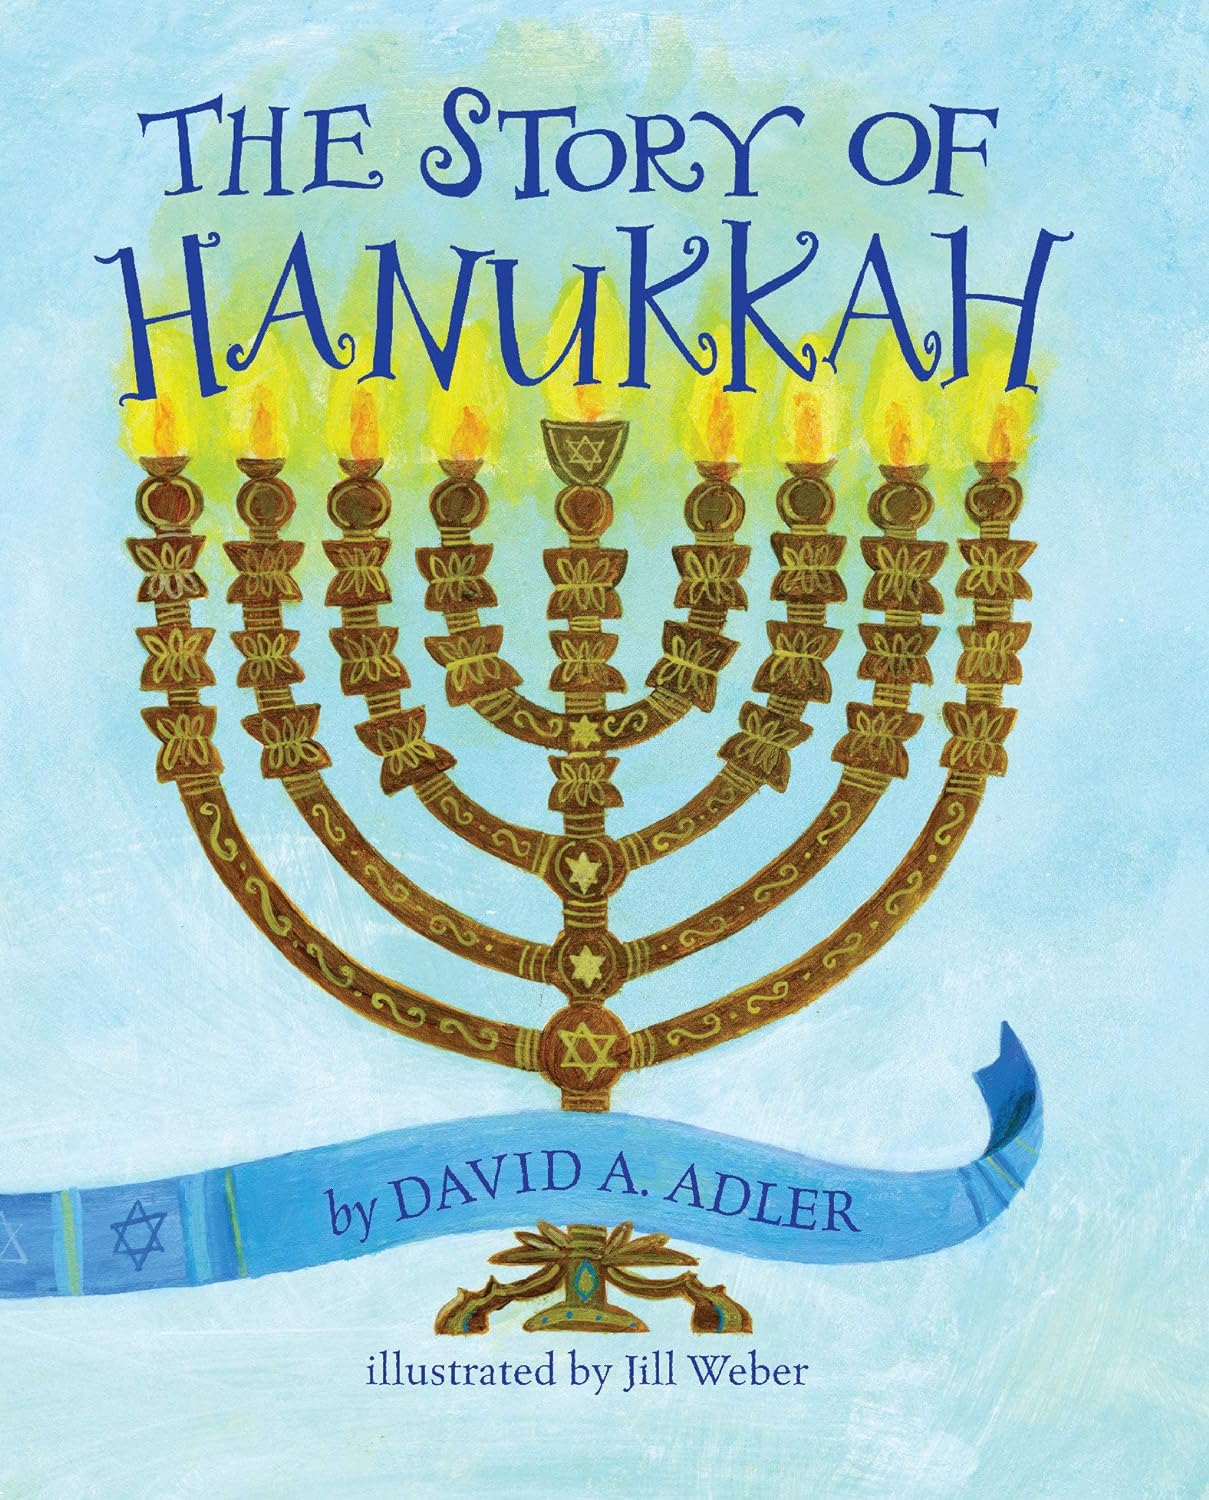 "The Story of Hanukkah" by David A. Adler